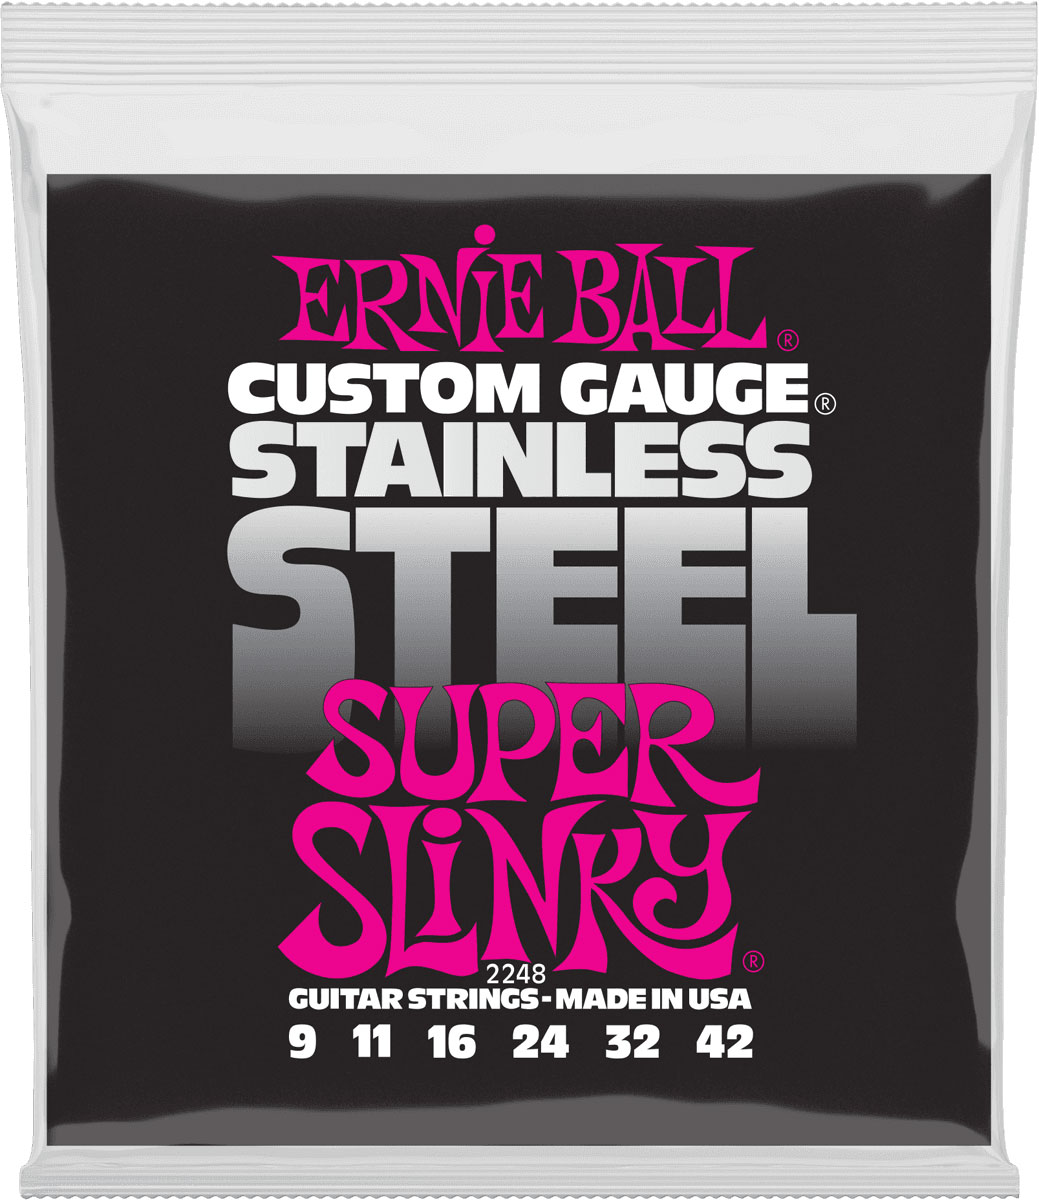 ERNIE BALL 2248 STAINLESS STEEL SUPER SLINKY 9-42